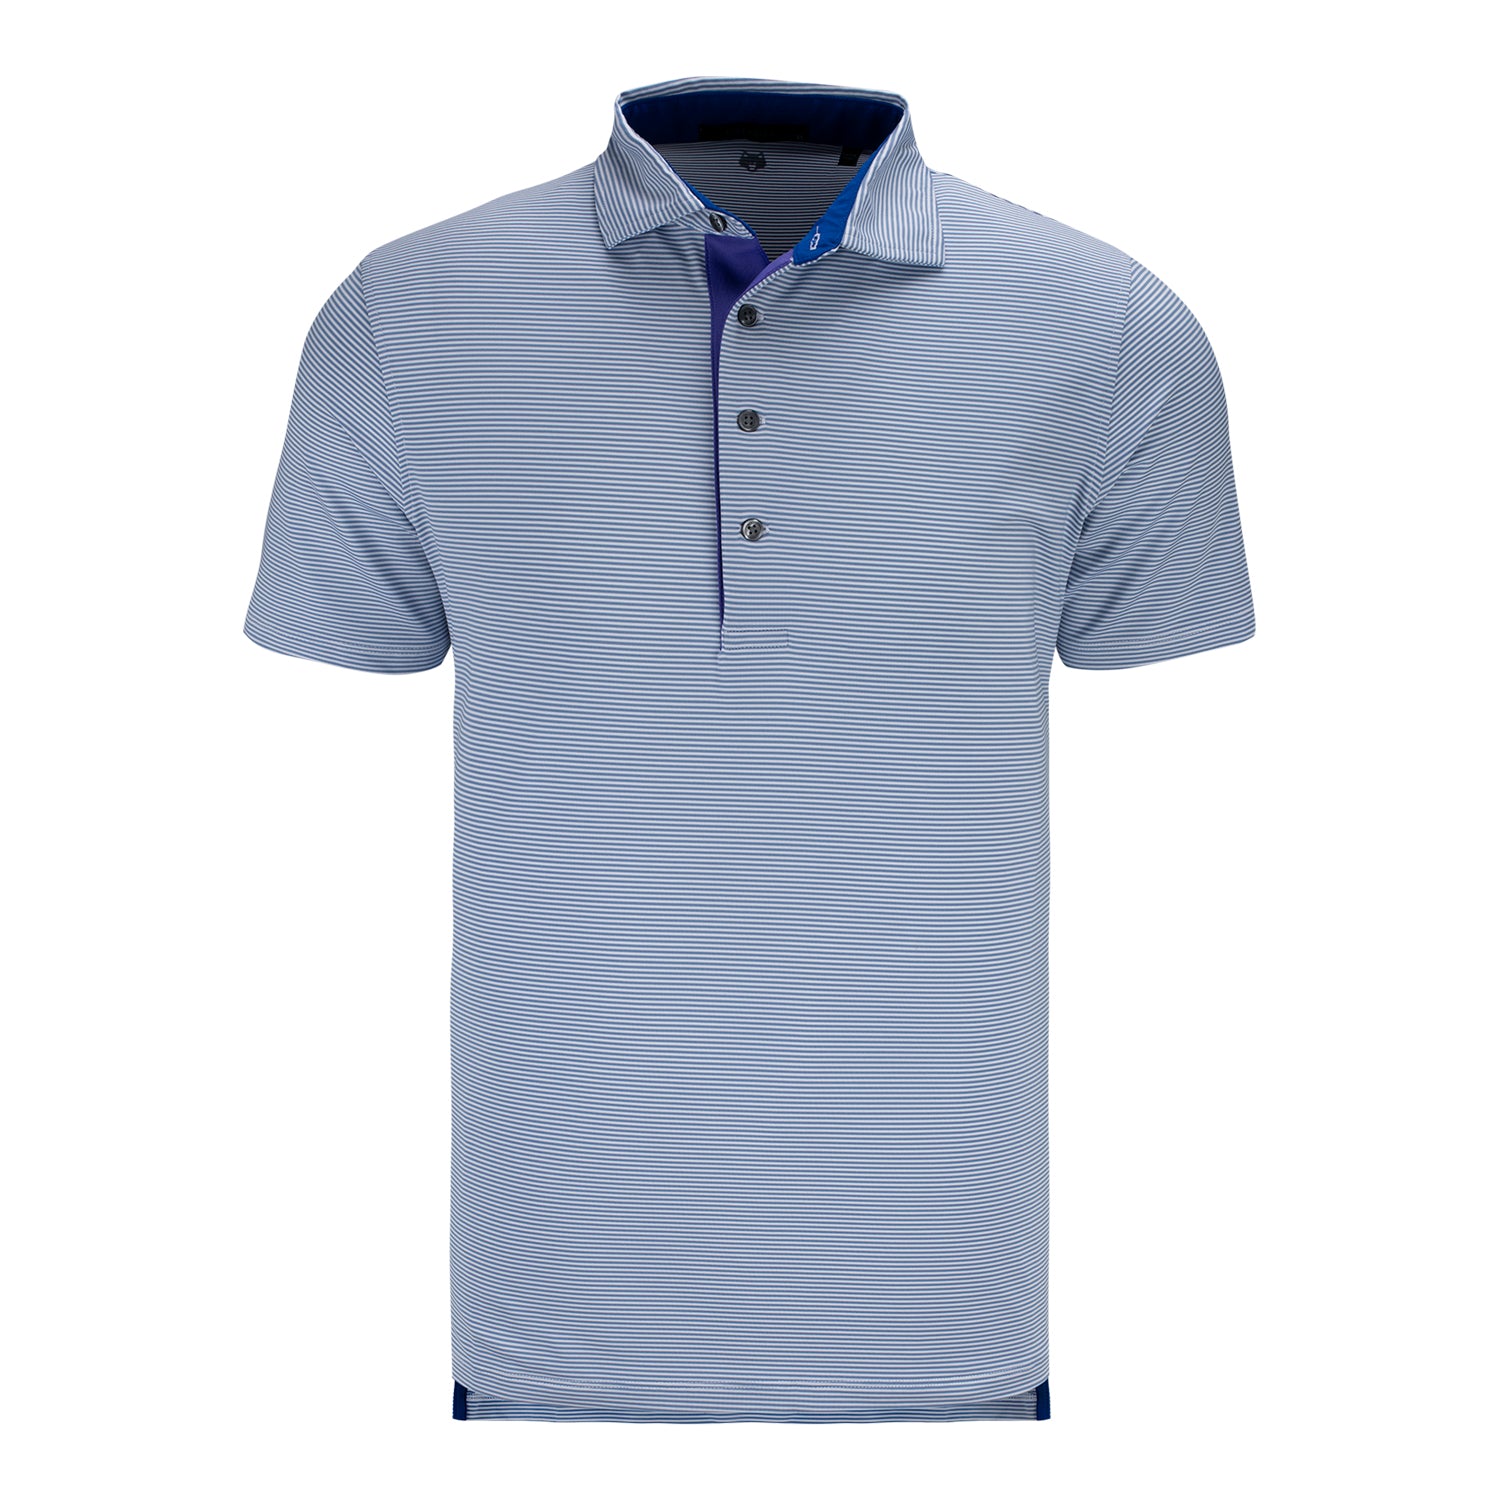 Greyson Clothiers LPGA Men's Saranac Golf Polo - Front View